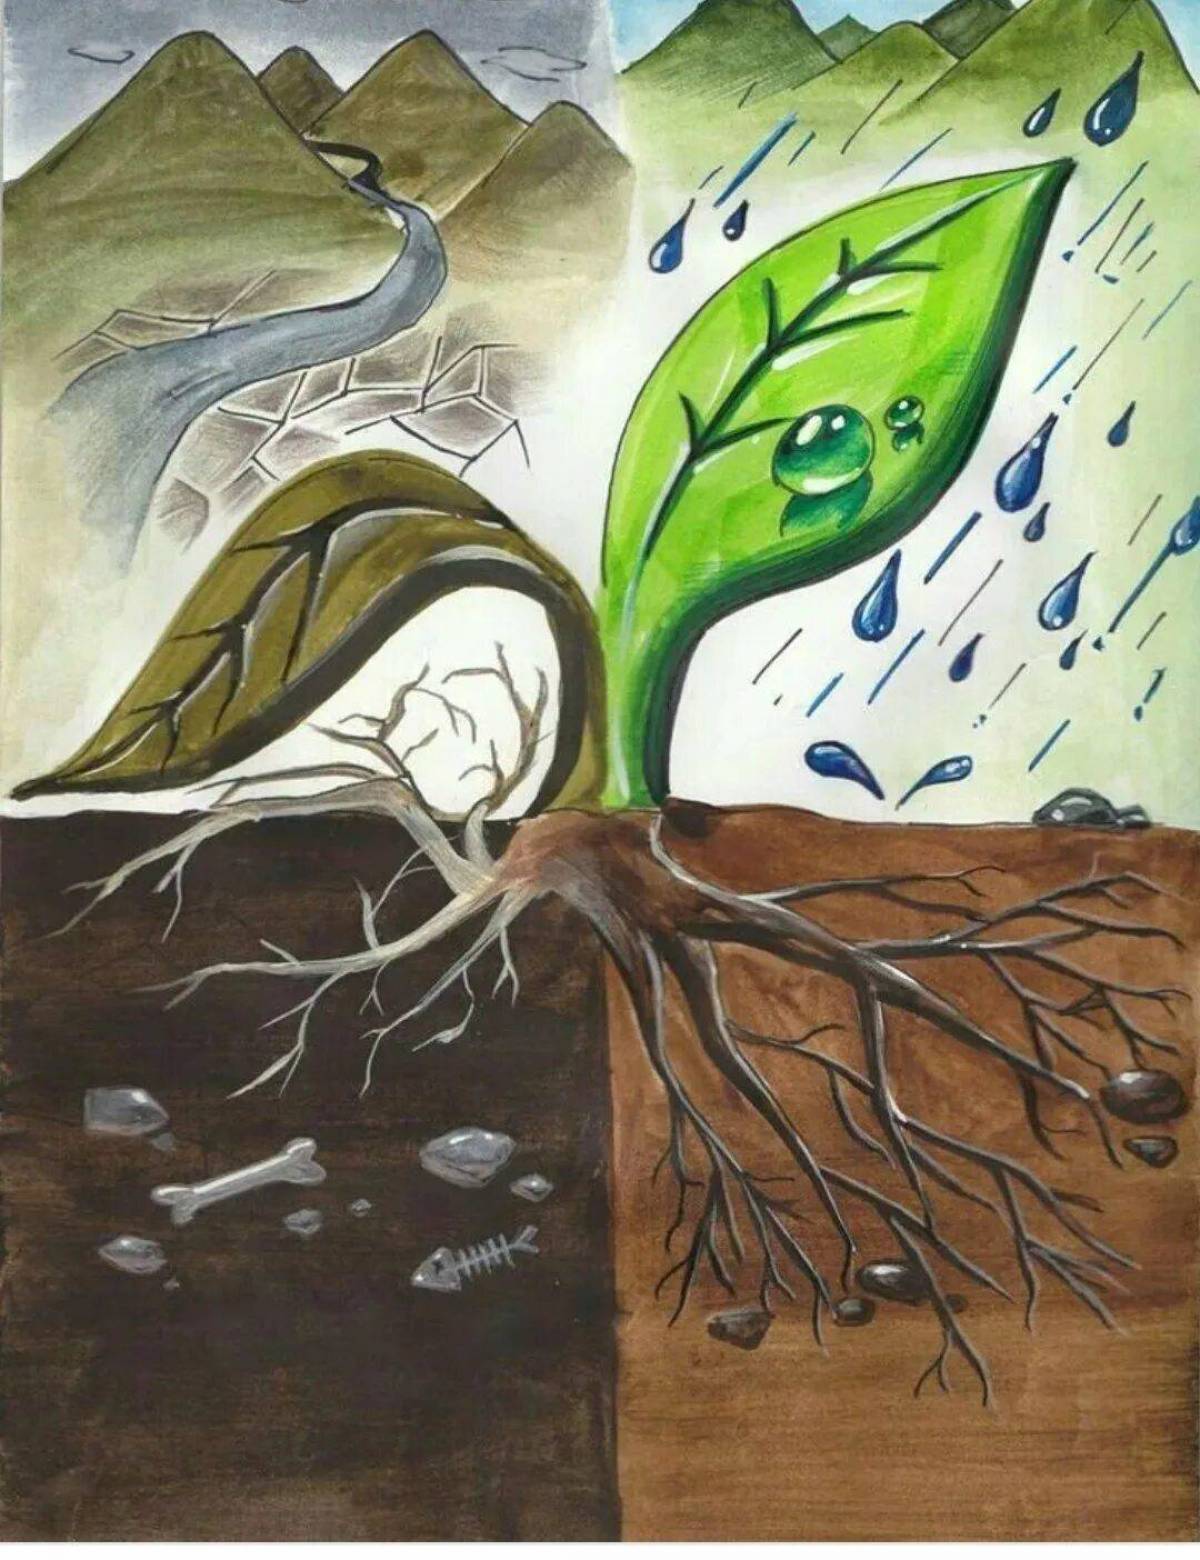 Рисунок год экология. Рисунок на тему экология. Экологический плакат. Рисенокна экологическую тему. Рисунок на тему Экологика.